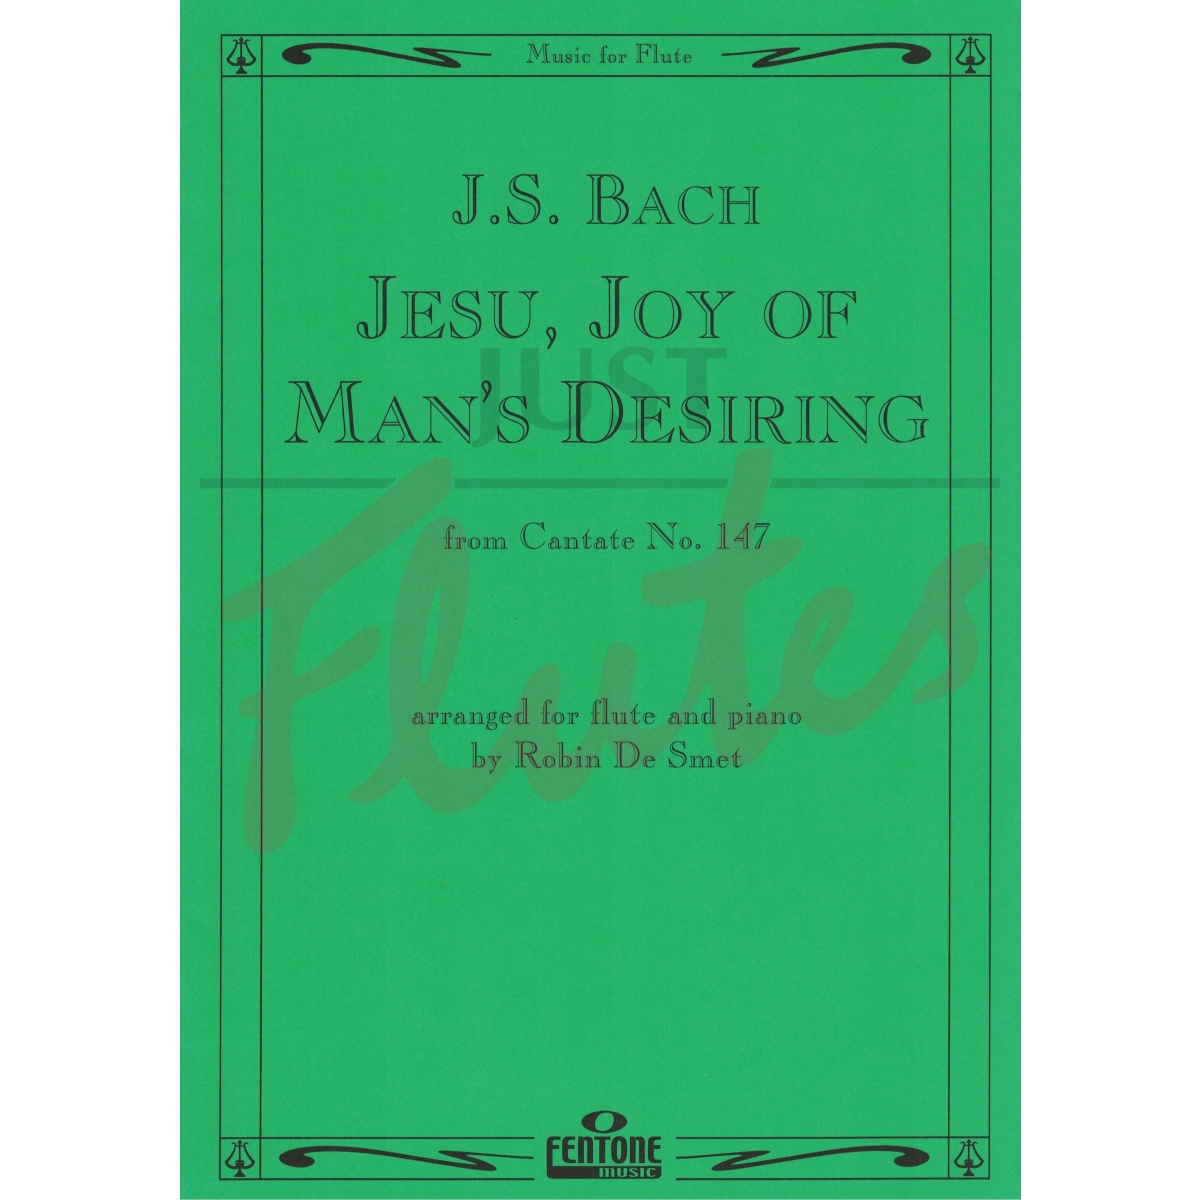 Jesu Joy of Man's Desiring [Flute and Piano]